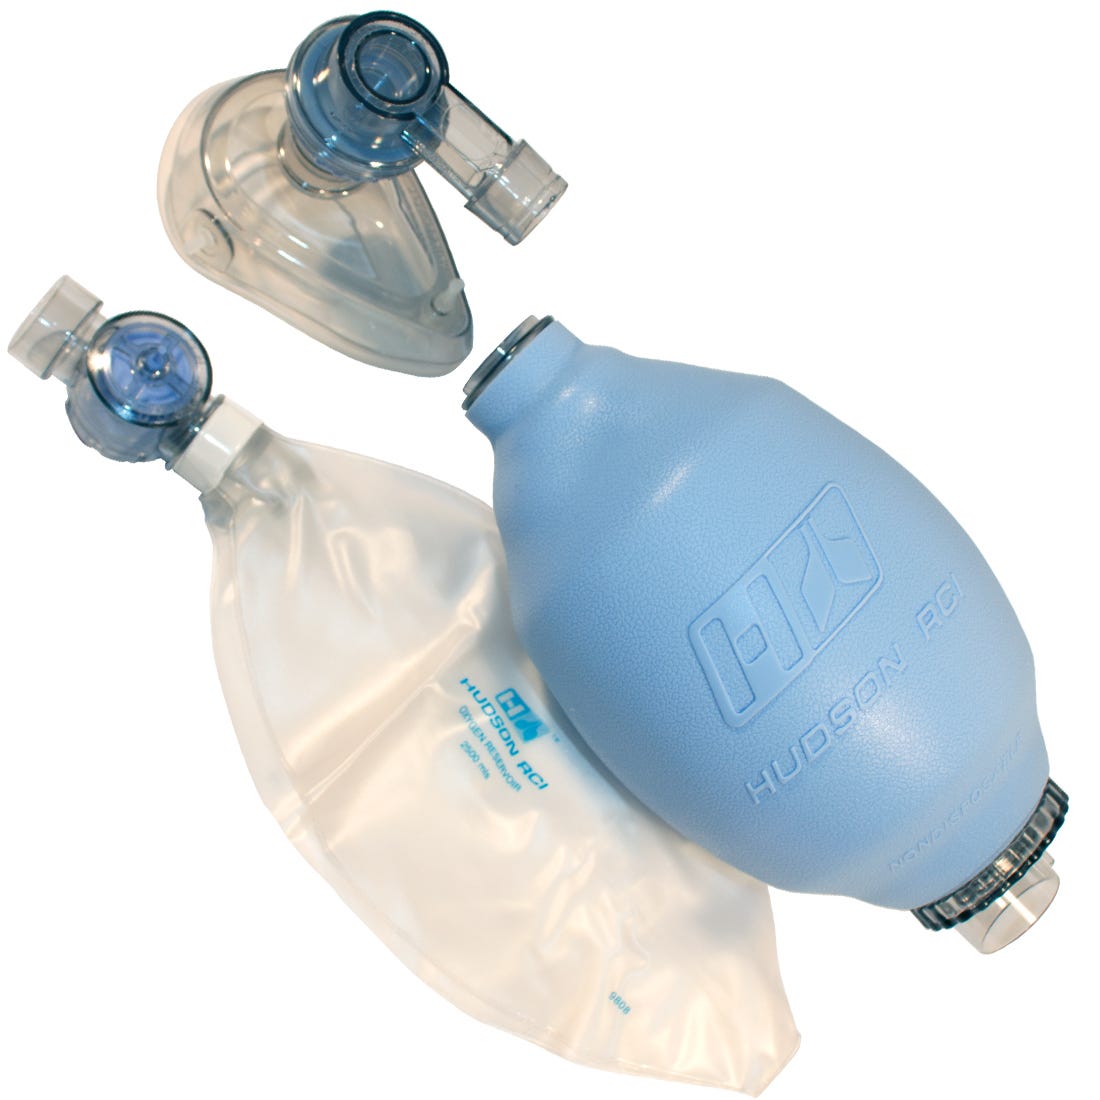 LifeSaver Adult Resuscitation Bag